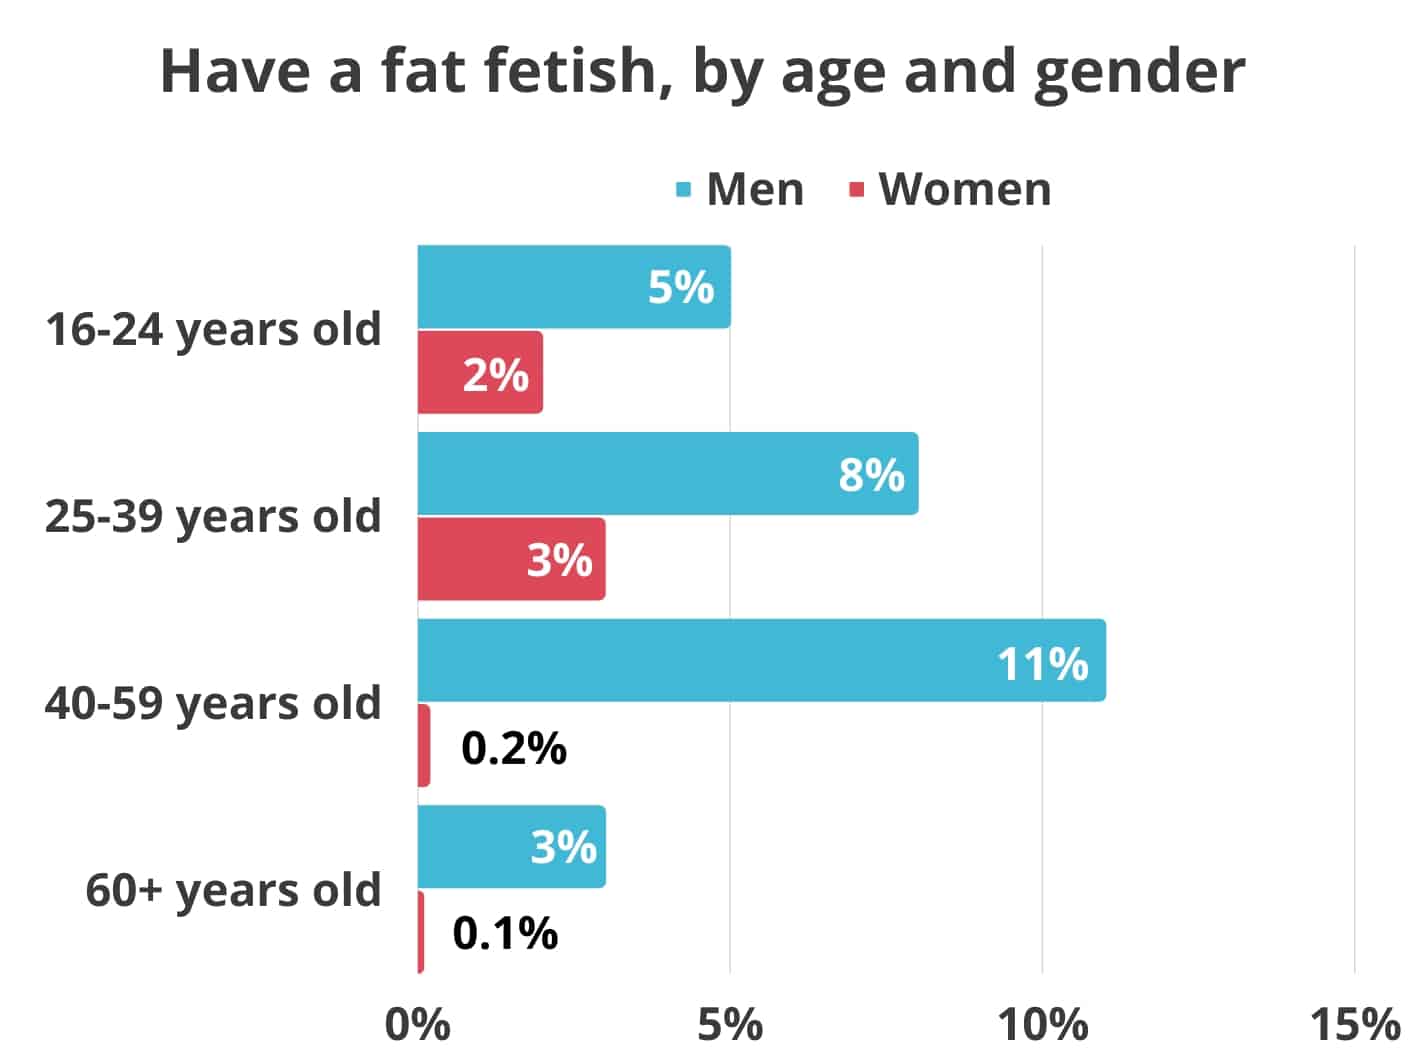 Fat fetish statistics by age